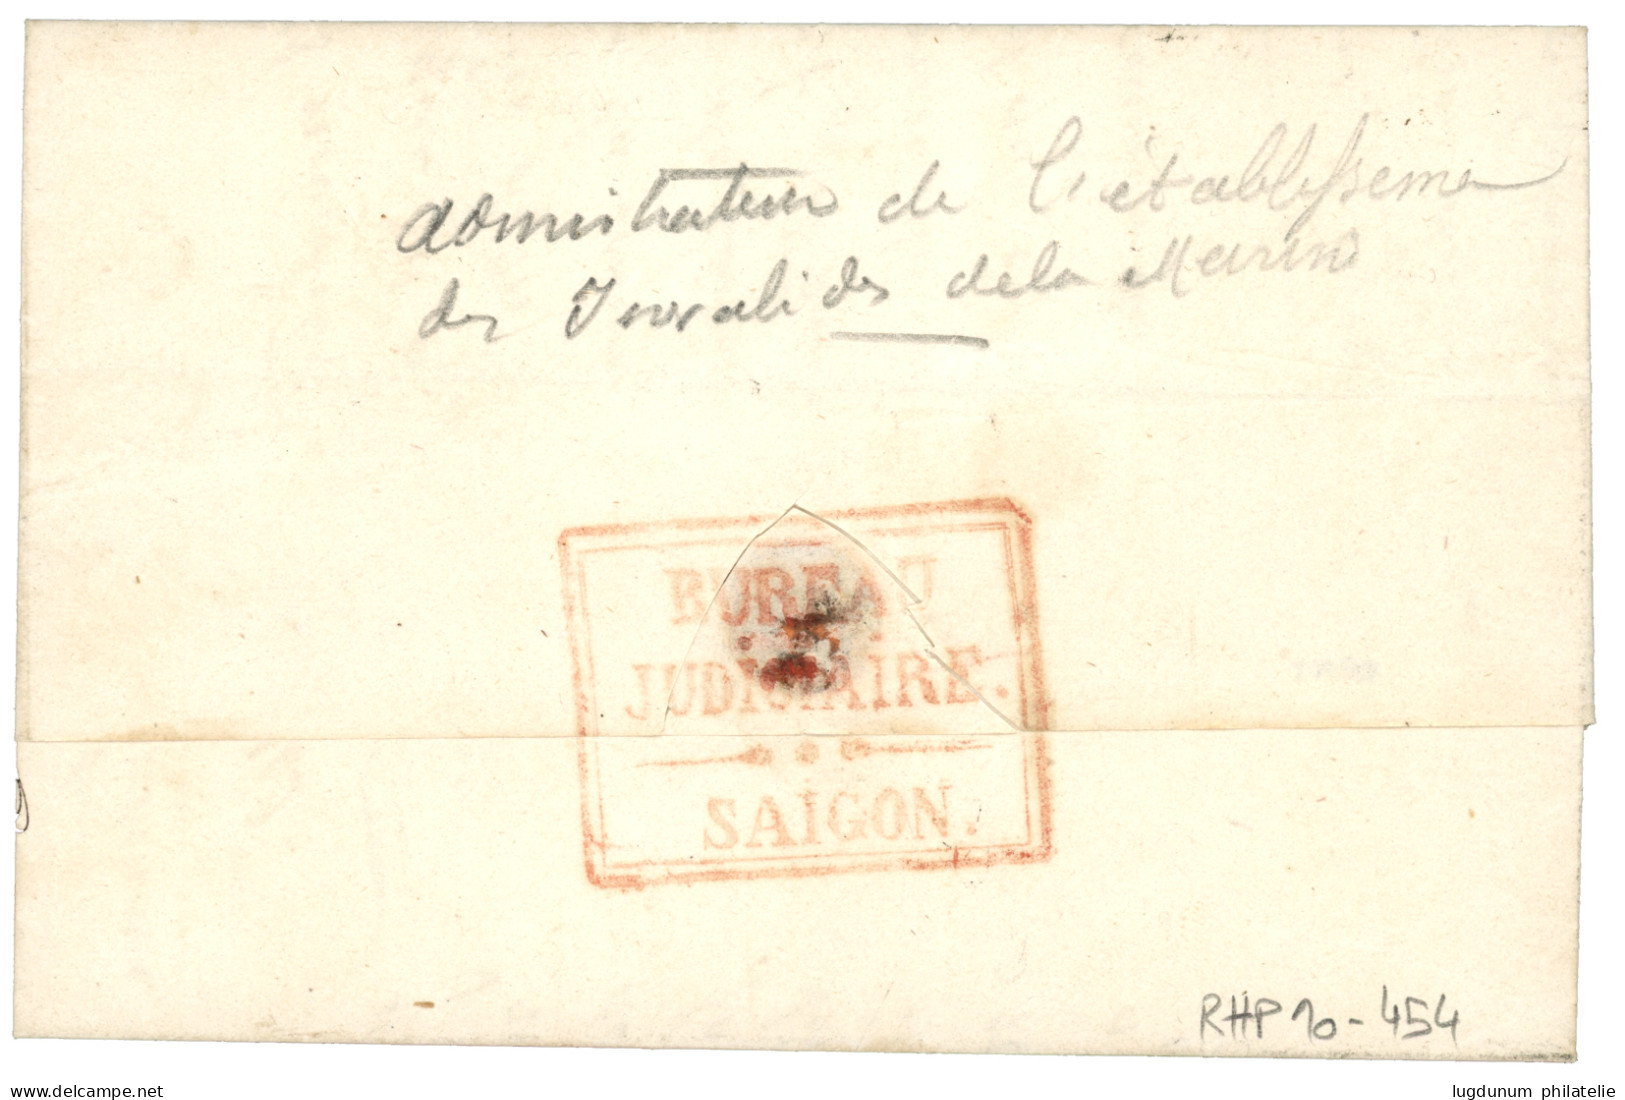 EXPEDITION De COCHINCHINE : 1863 Grand Cachet ETABLISSEMENTS FRANCAIS DE LA COCHINCHINE SAIGON (rare) + Taxe 6 + BUREAU  - Army Postmarks (before 1900)